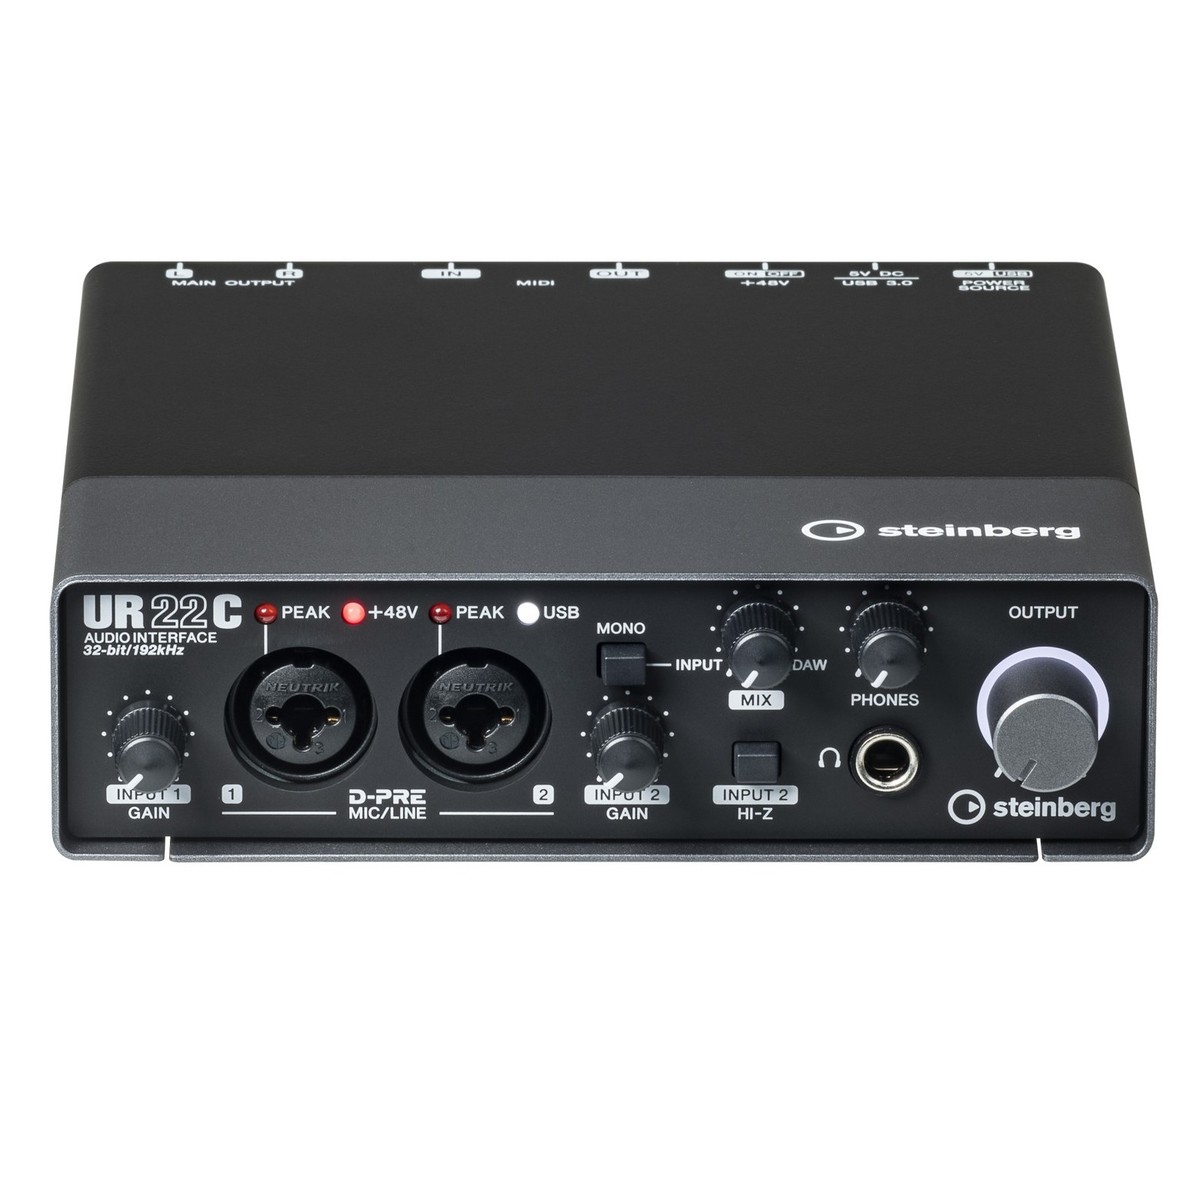 STEINBERG UR22C INTERFACCIA AUDIO USB 3.0 MIDI 2 CANALI CON D-PRE 24BIT 192Khz 4